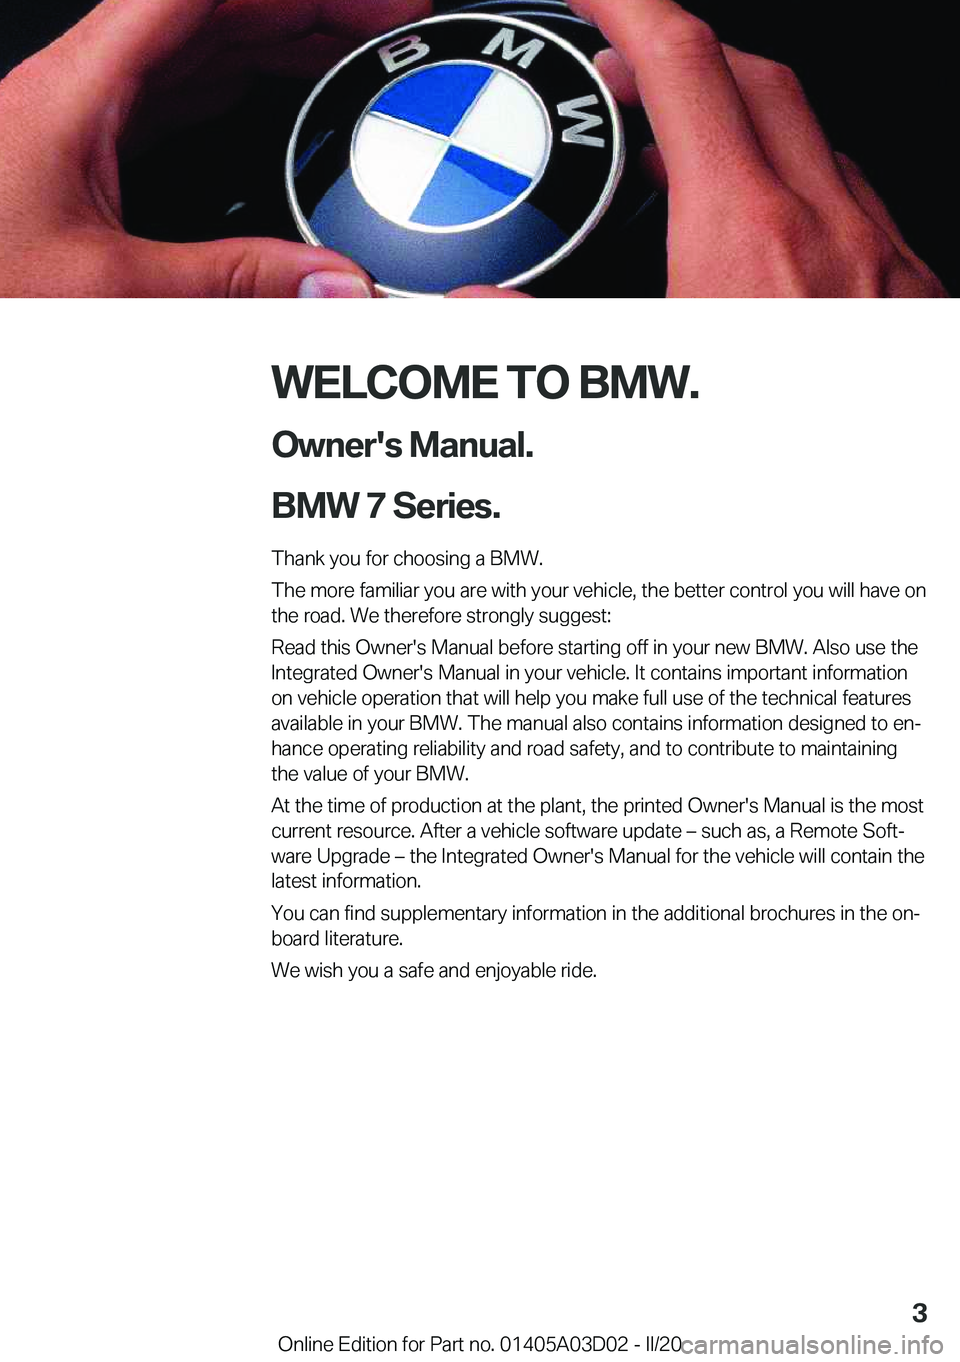 BMW 7 SERIES 2021  Owners Manual �W�E�L�C�O�M�E��T�O��B�M�W�.�O�w�n�e�r�'�s��M�a�n�u�a�l�.
�B�M�W��7��S�e�r�i�e�s�.
�T�h�a�n�k��y�o�u��f�o�r��c�h�o�o�s�i�n�g��a��B�M�W�.
�T�h�e��m�o�r�e��f�a�m�i�l�i�a�r��y�o�u��a�r�